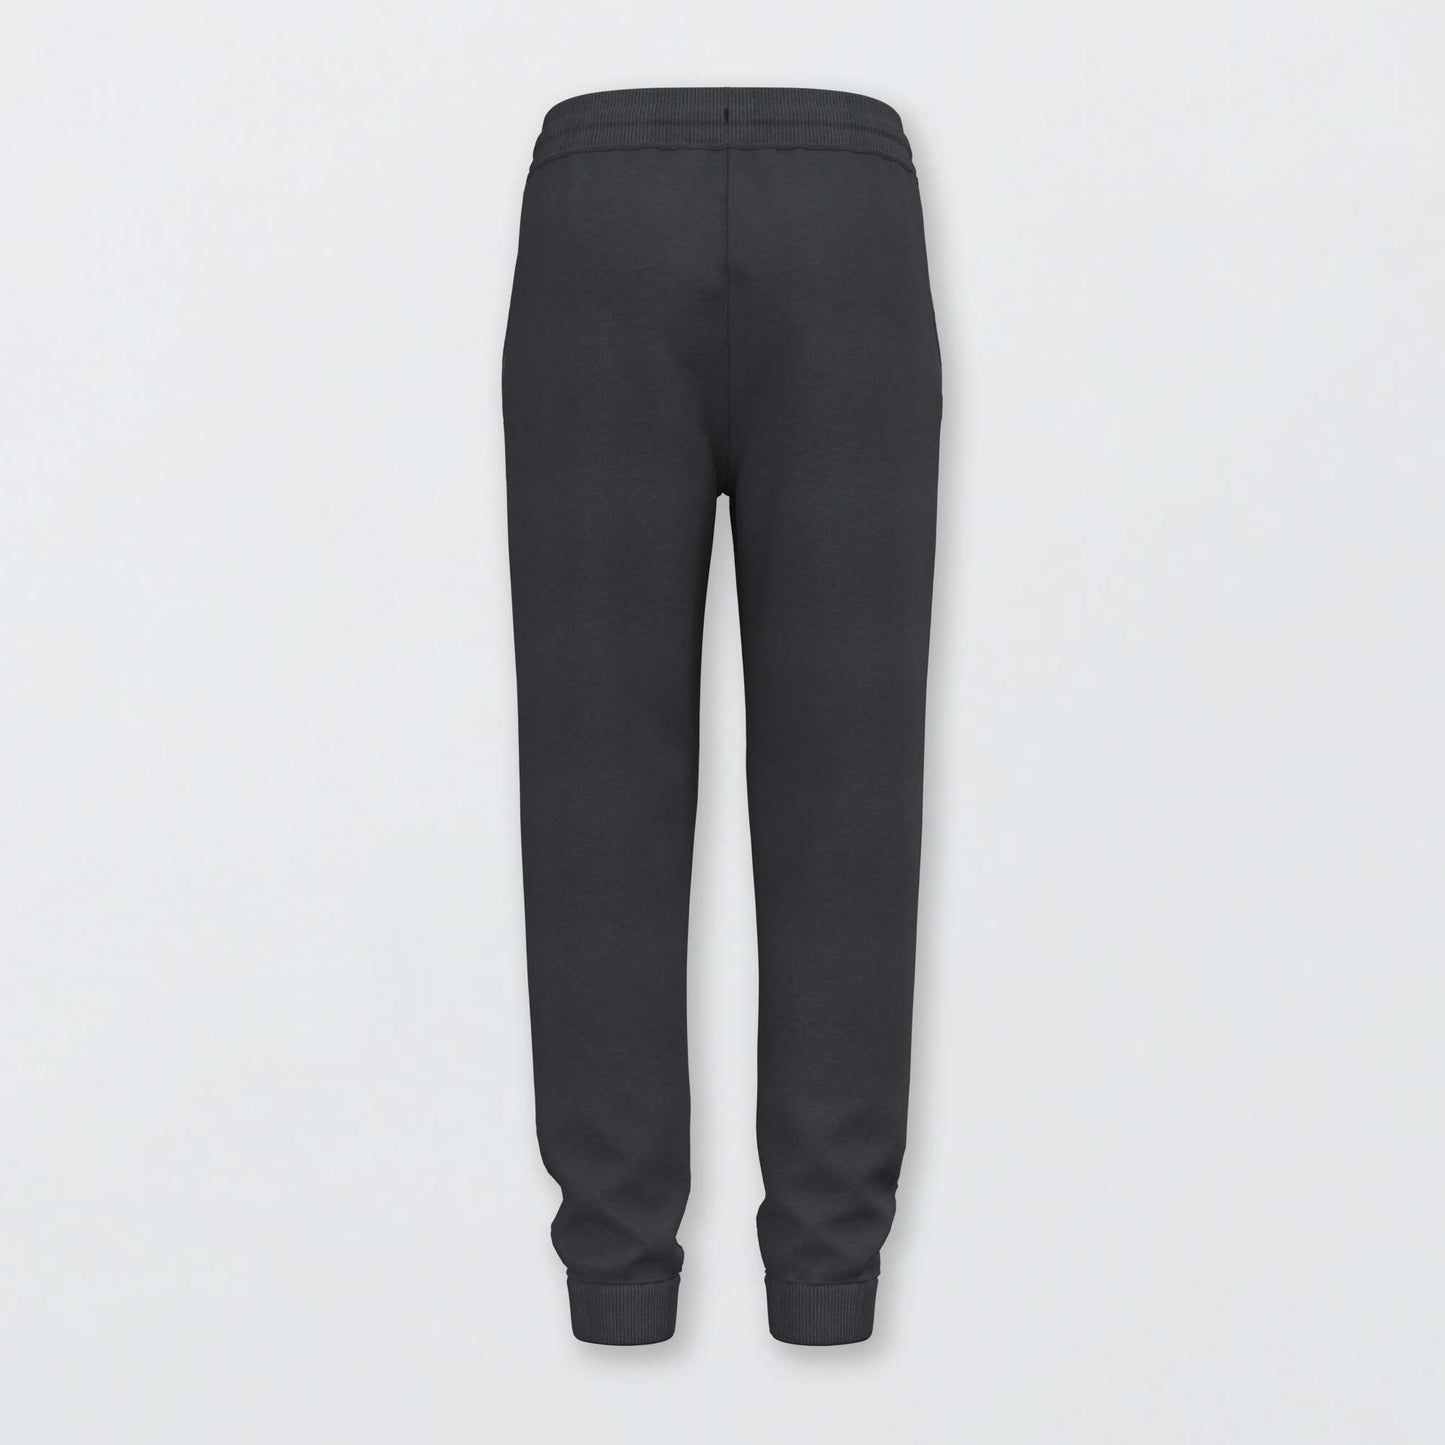 Plain sweatshirt fabric trousers black